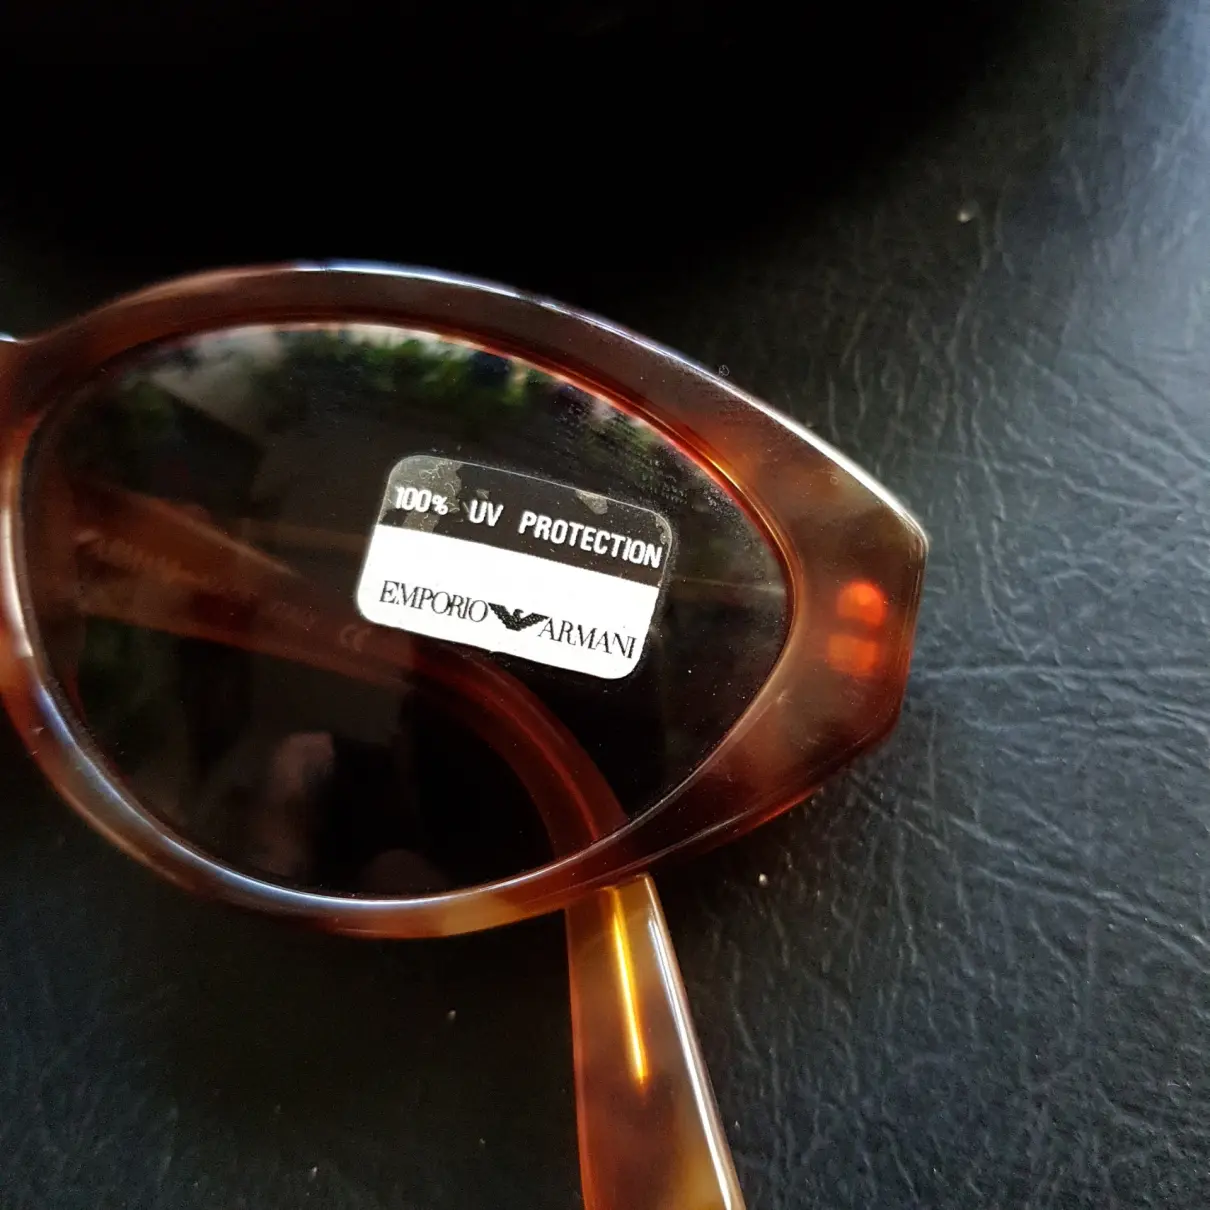 Sunglasses Giorgio Armani